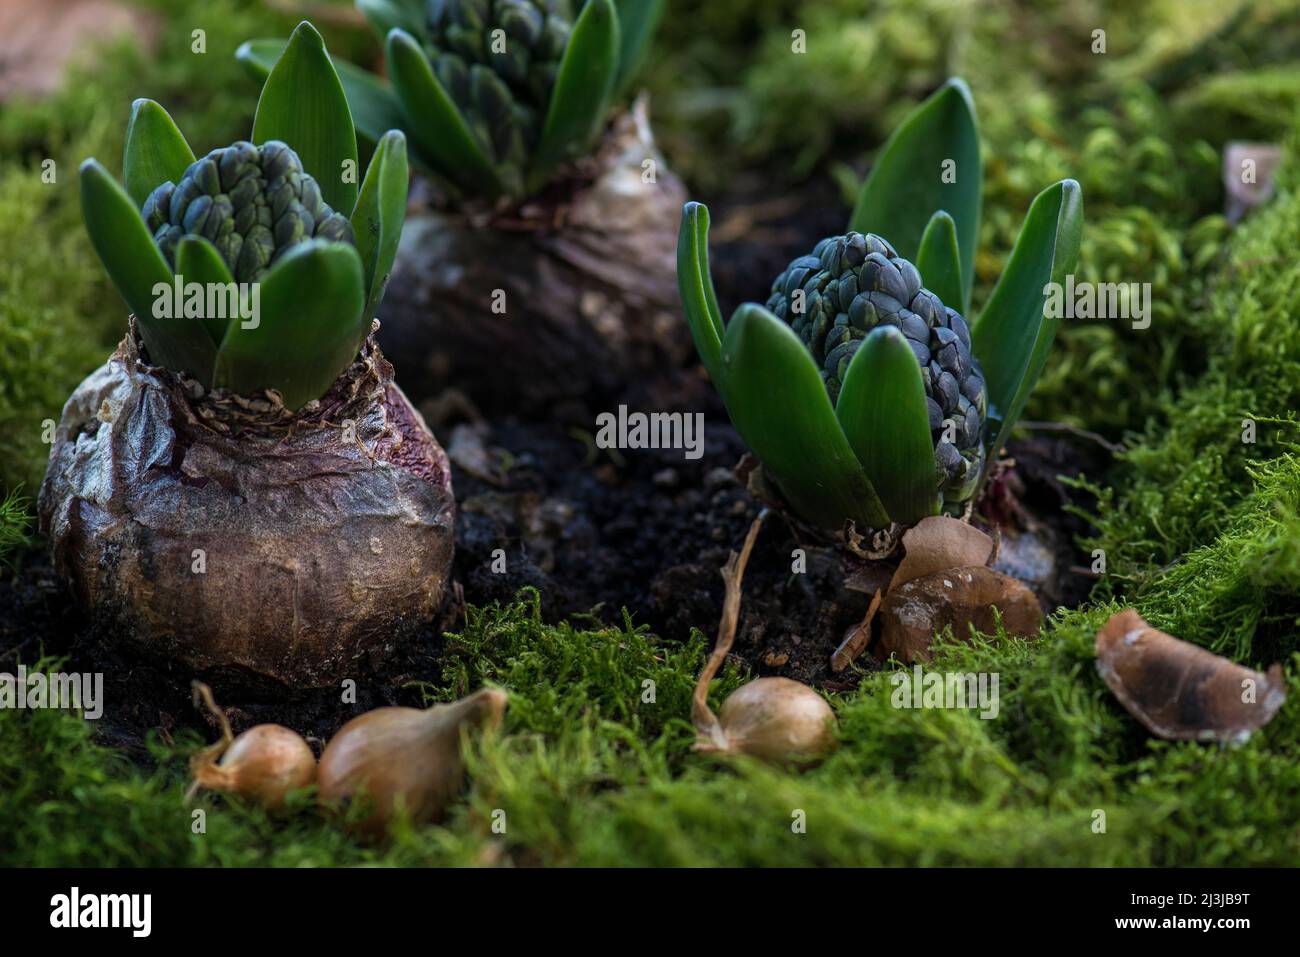 Giacinti (Hyacinthus), giacinti da giardino, bulbi con boccioli di fiori in vaso, coperti di muschio Foto Stock